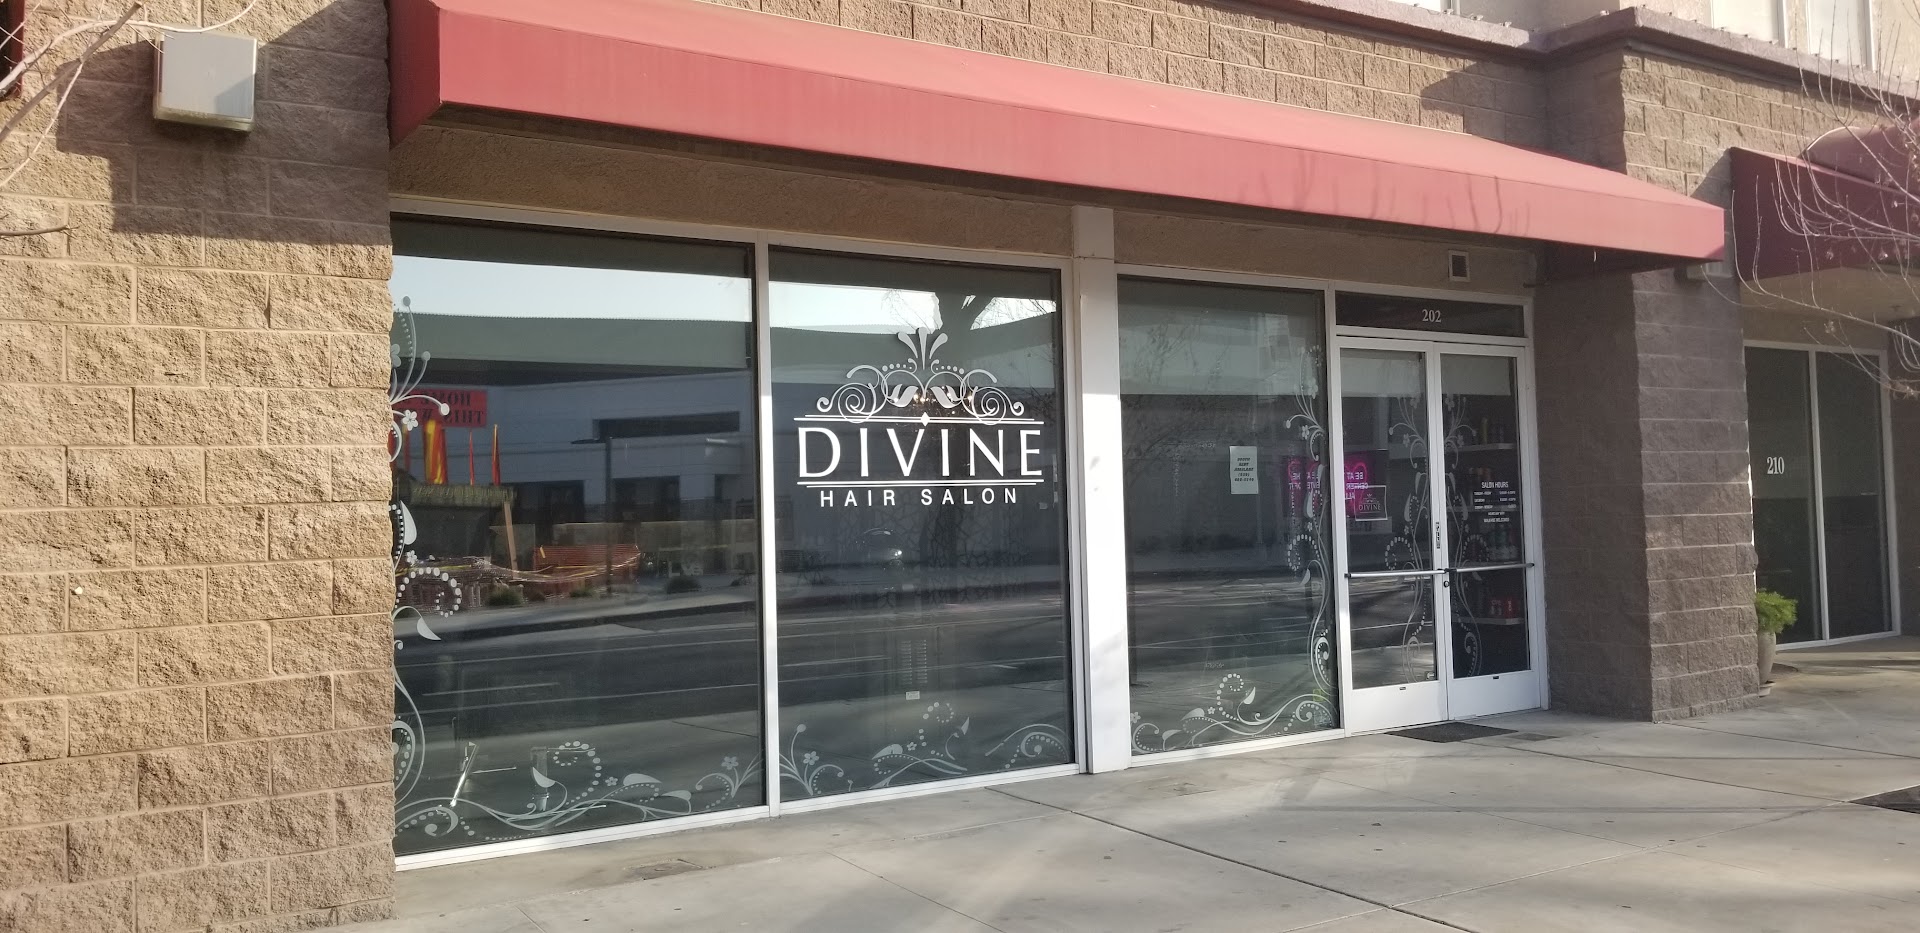 DIVINE HAIR SALON | Hair salon in Visalia, CA